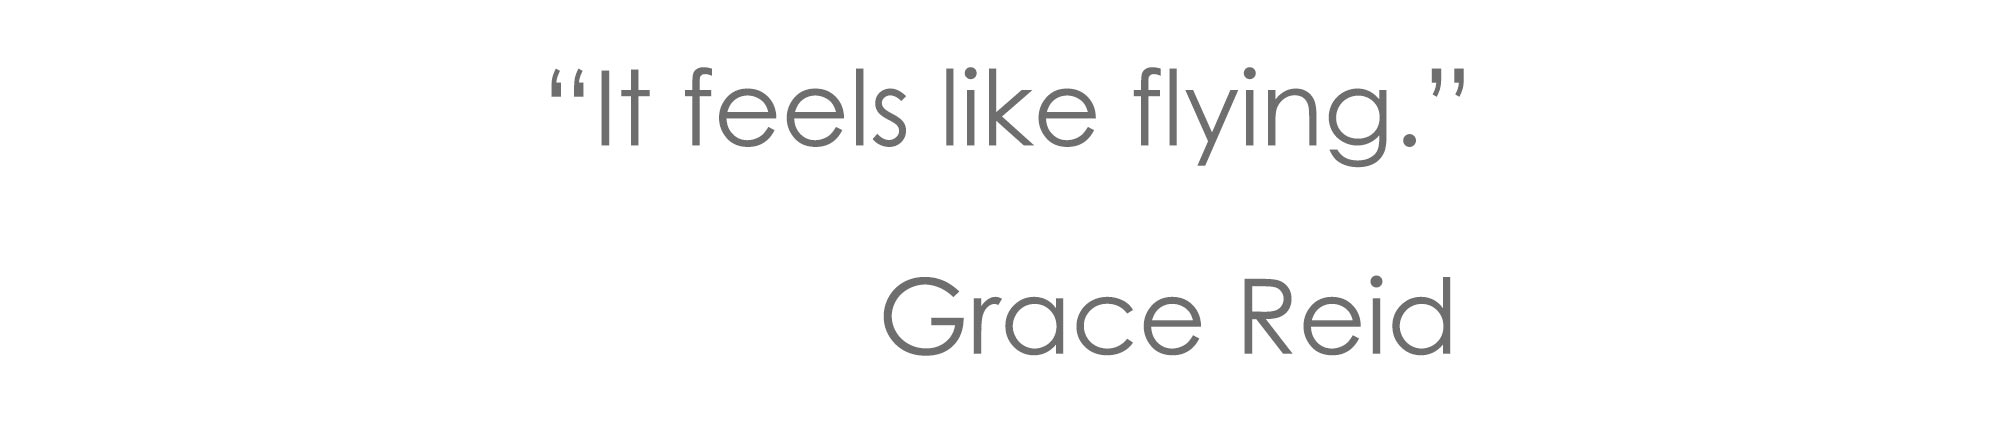 Grace-Reid-quote-25pt-text.jpg